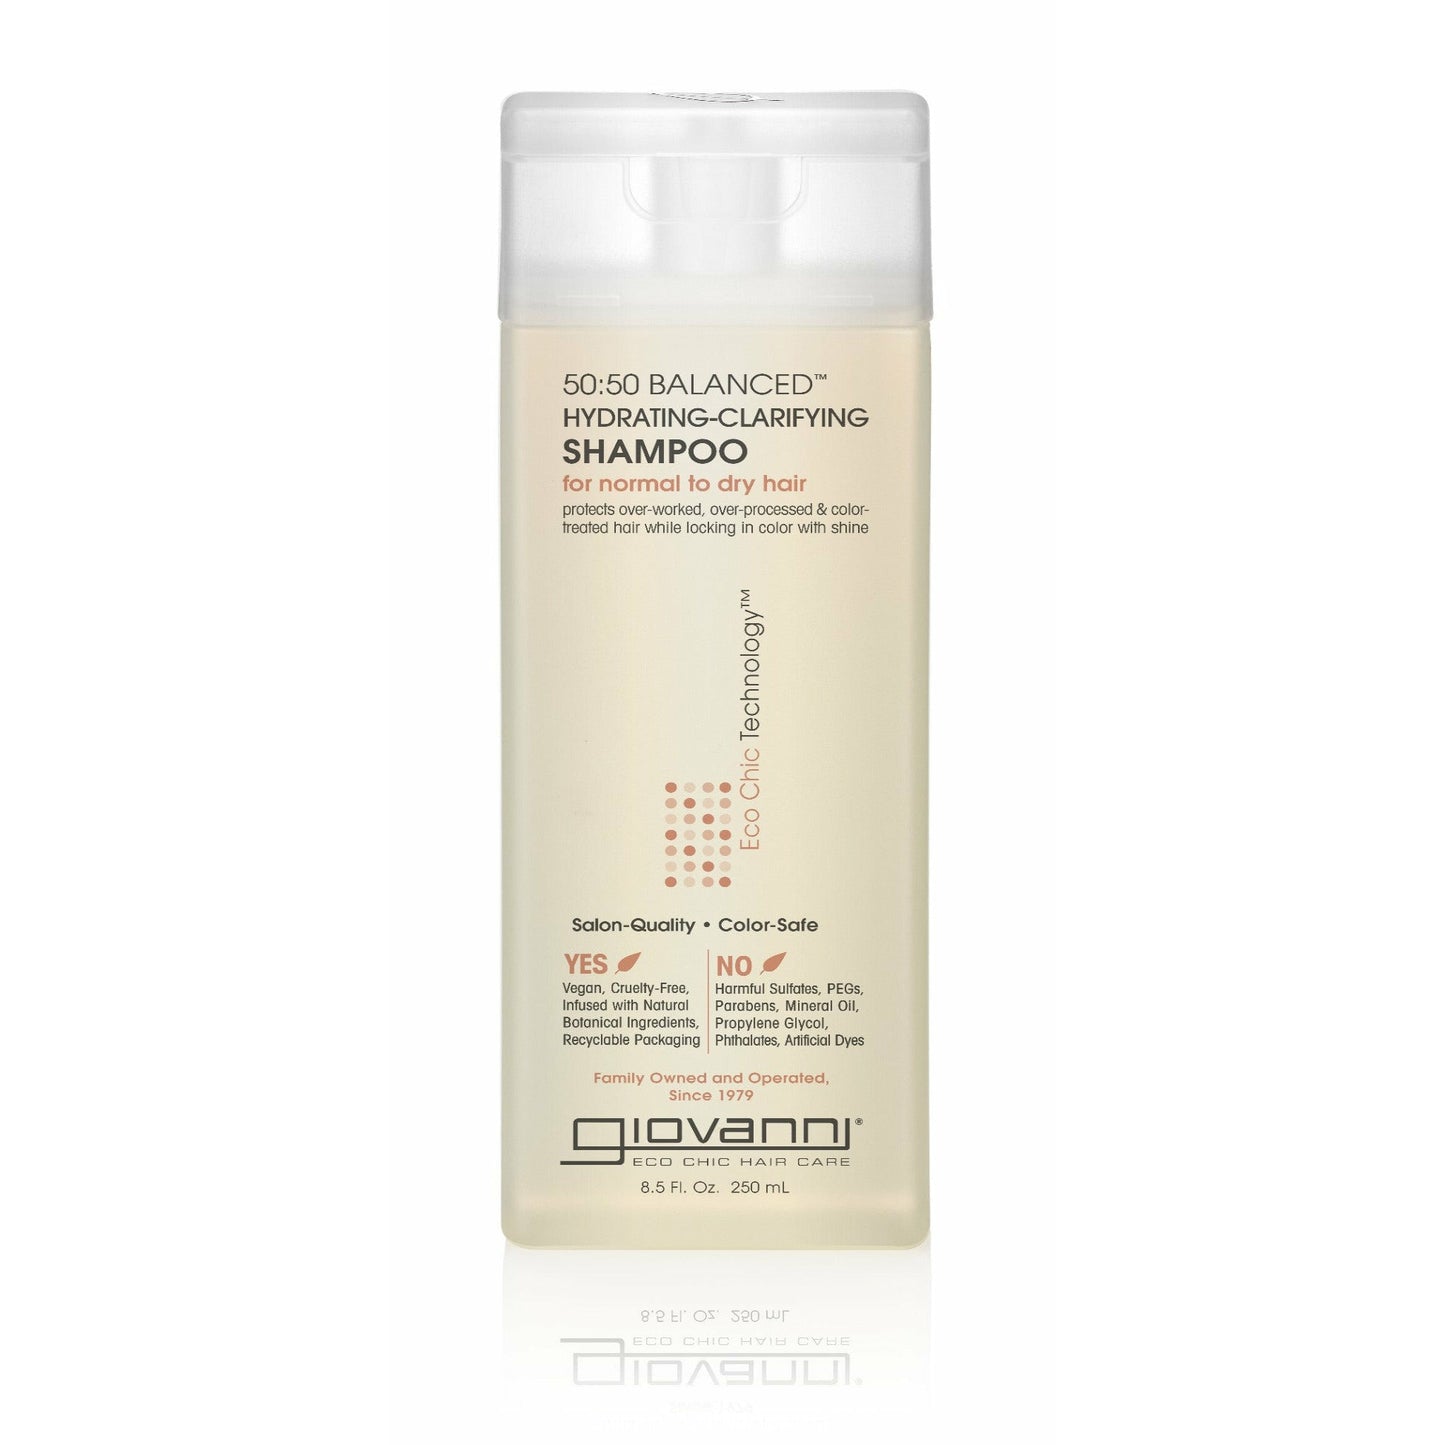 Giovanni - 50/50 Balanced Shampoo